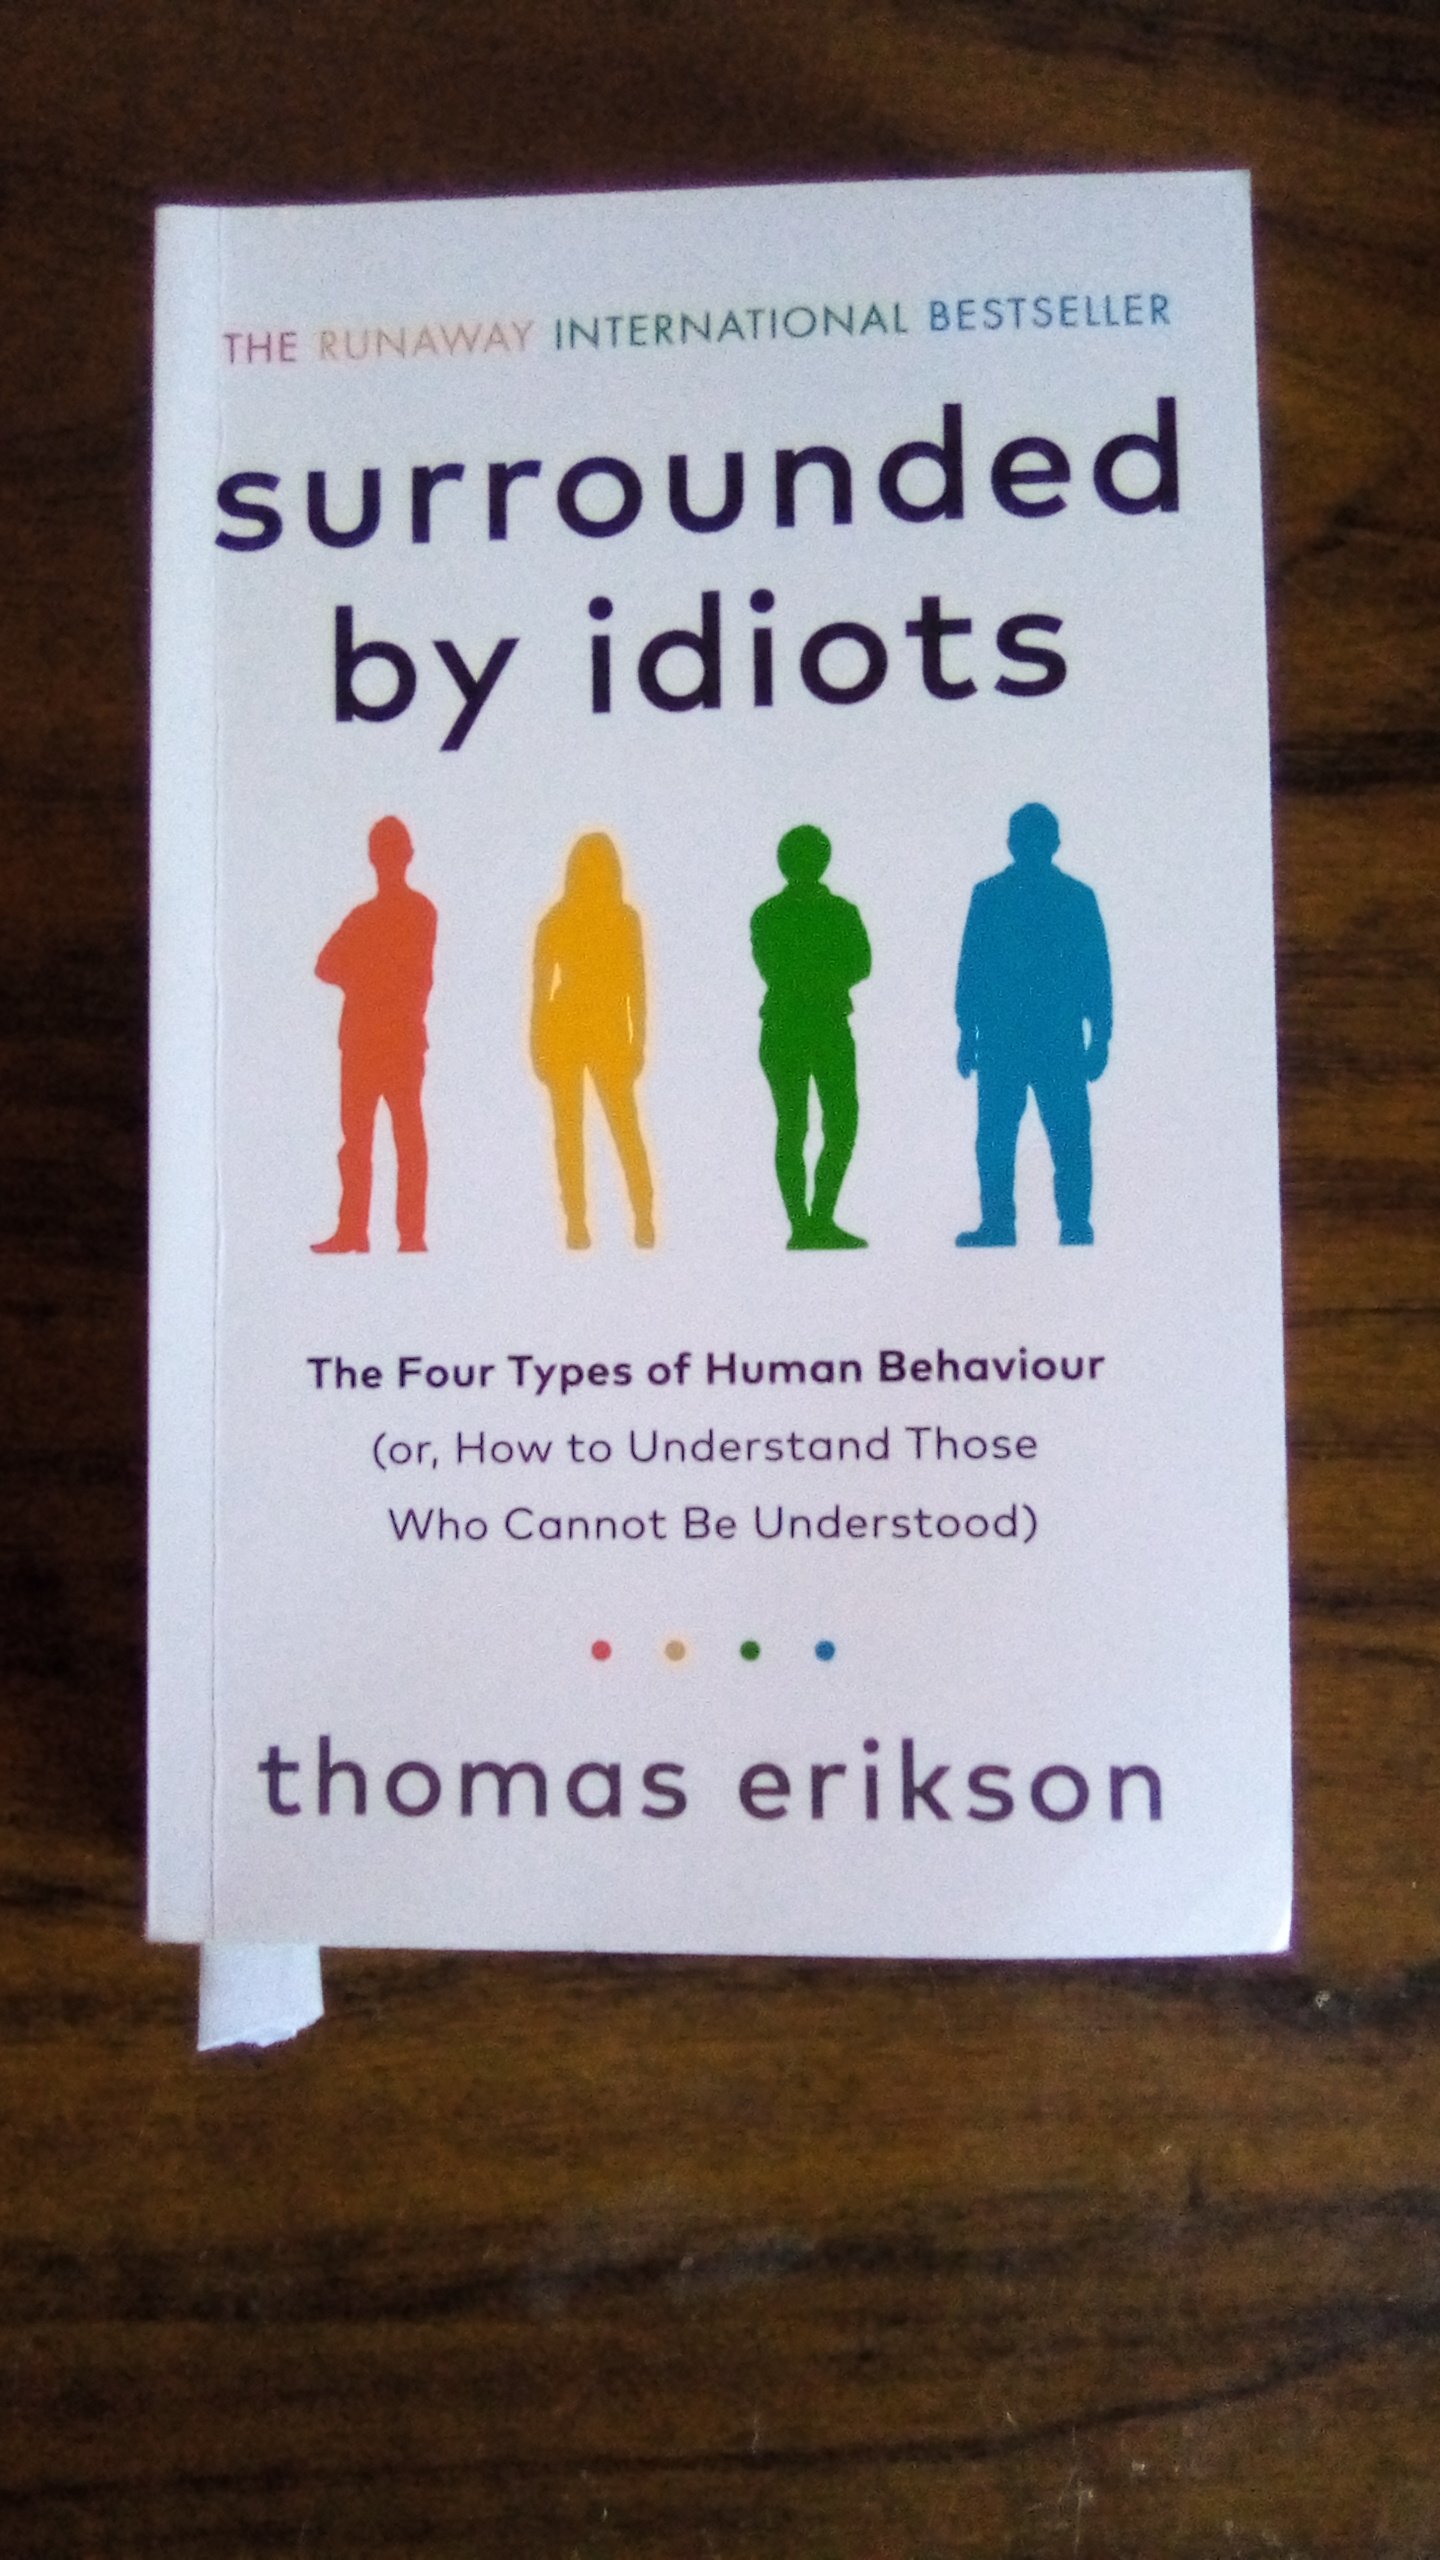 Book Summary - Surrounded by Idiots (Thomas Erikson)